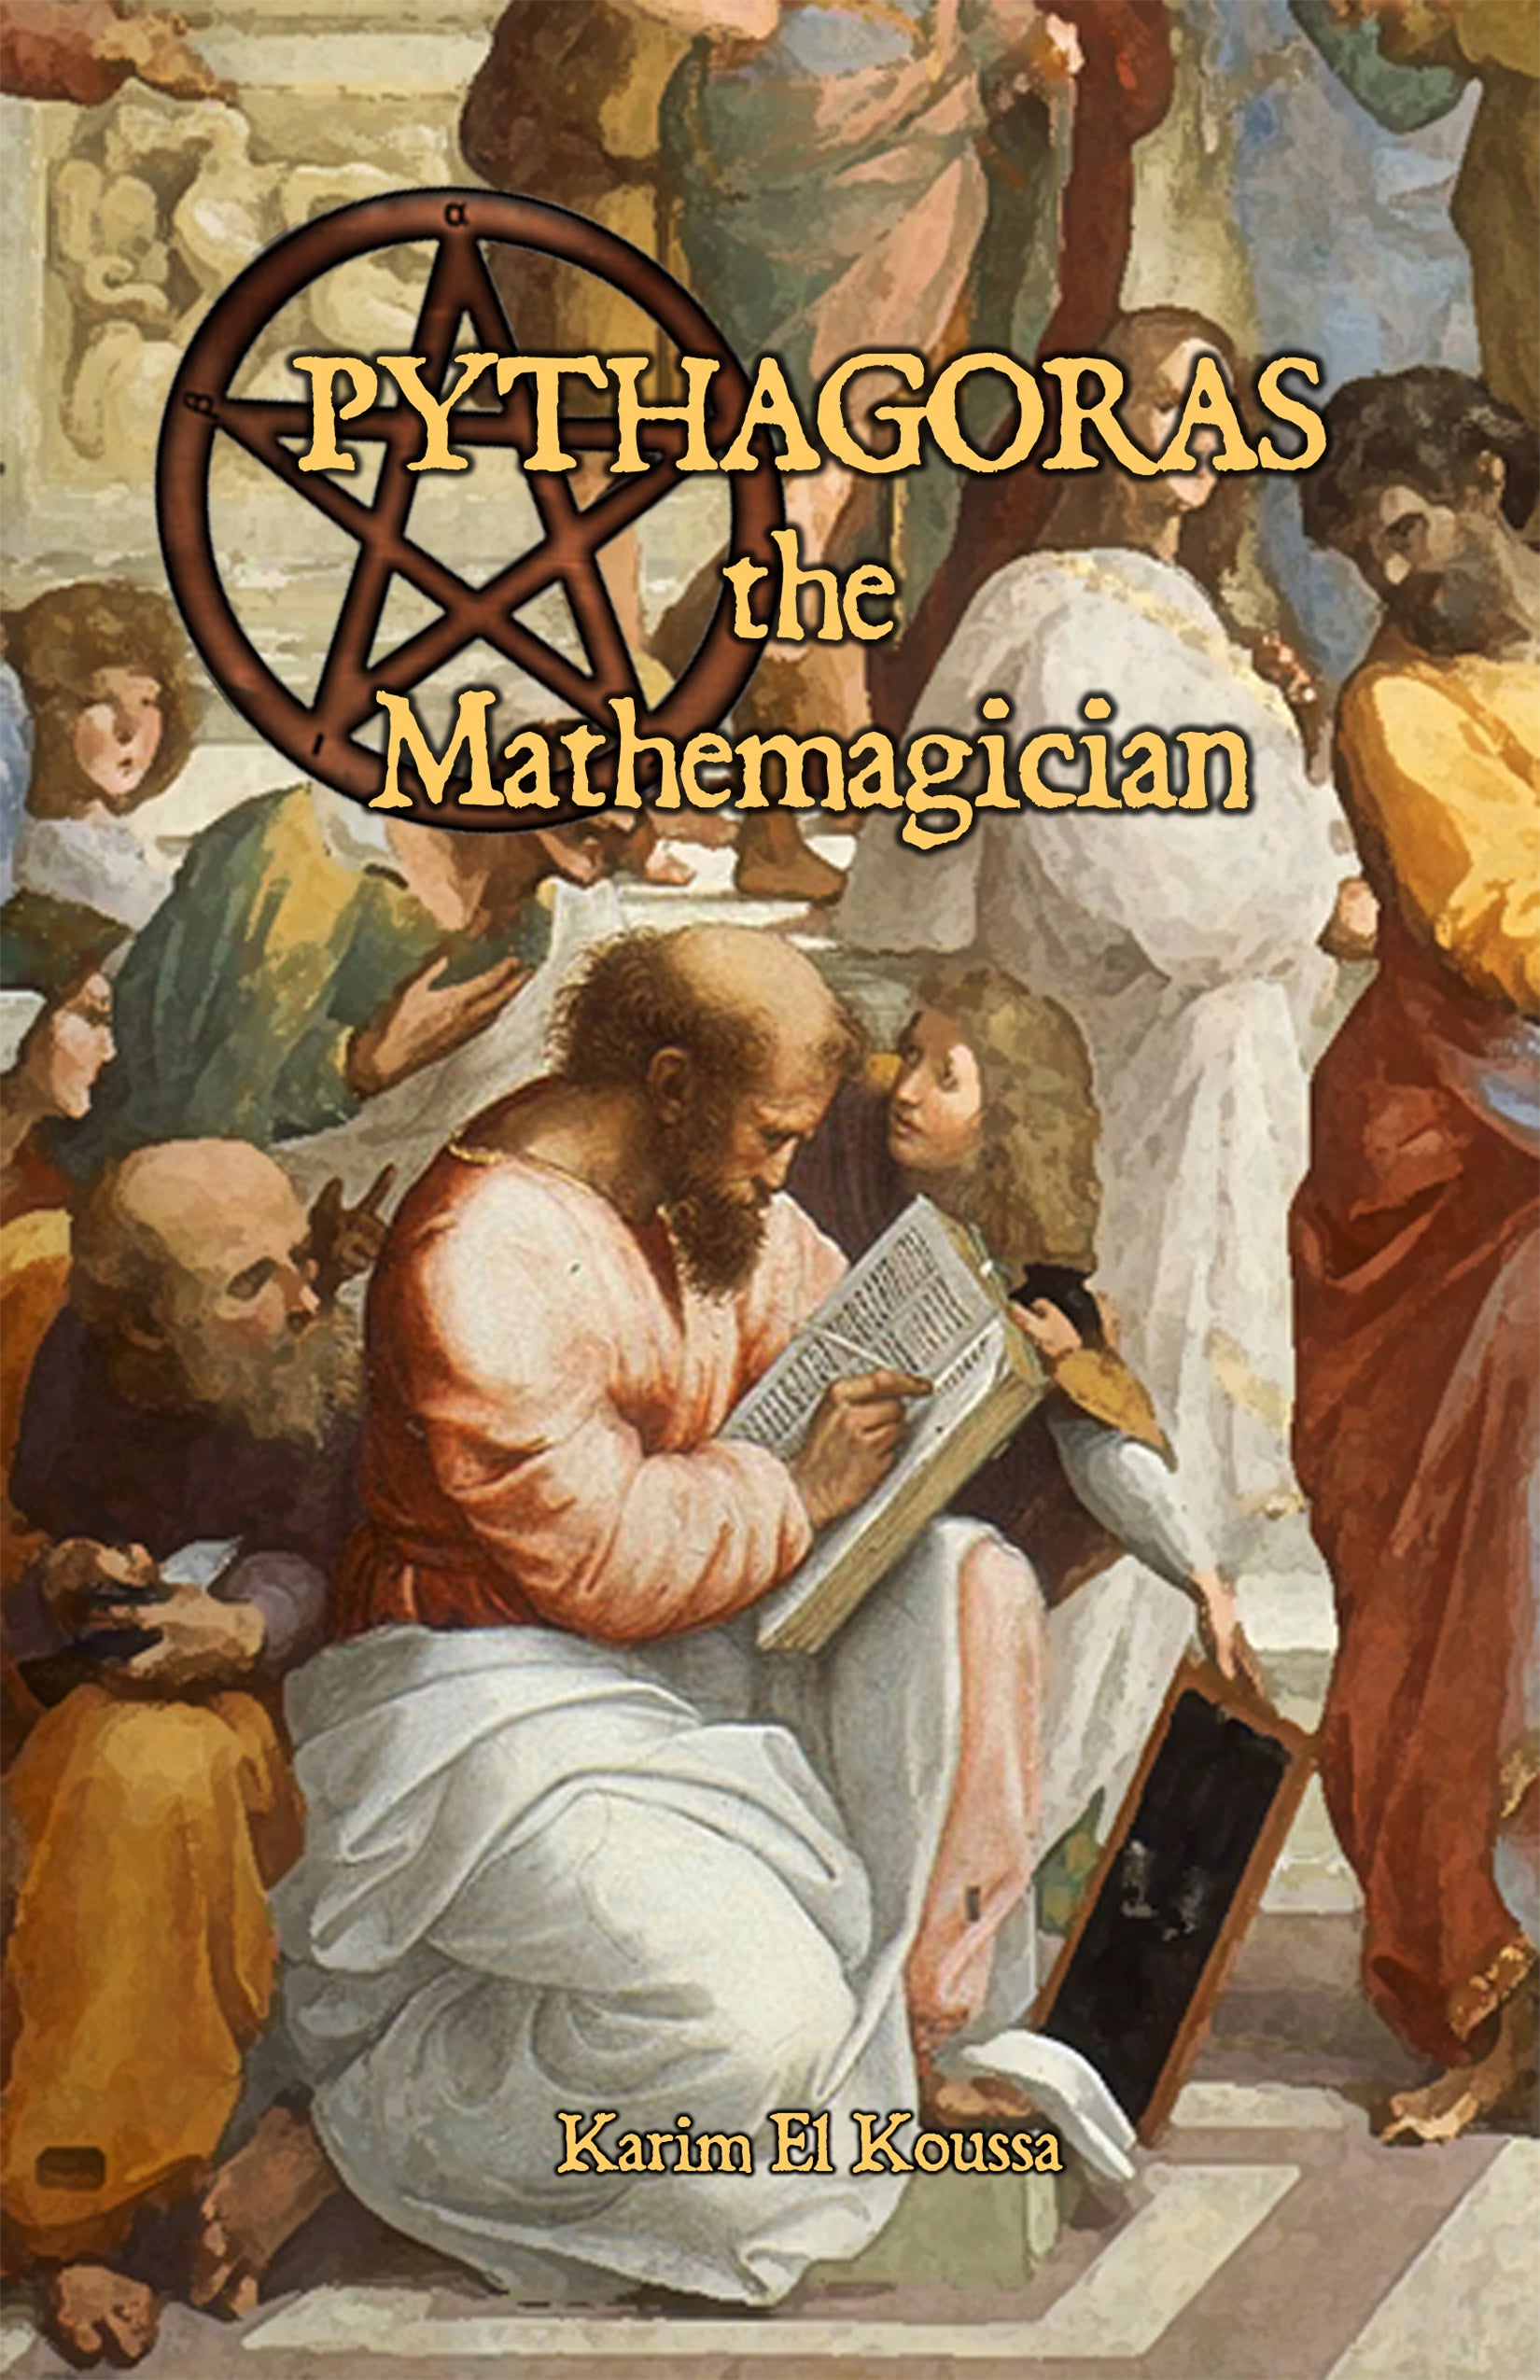 “Pythagoras” by Karim el Koussa surprises as the Ars Metaphysica bestseller for April